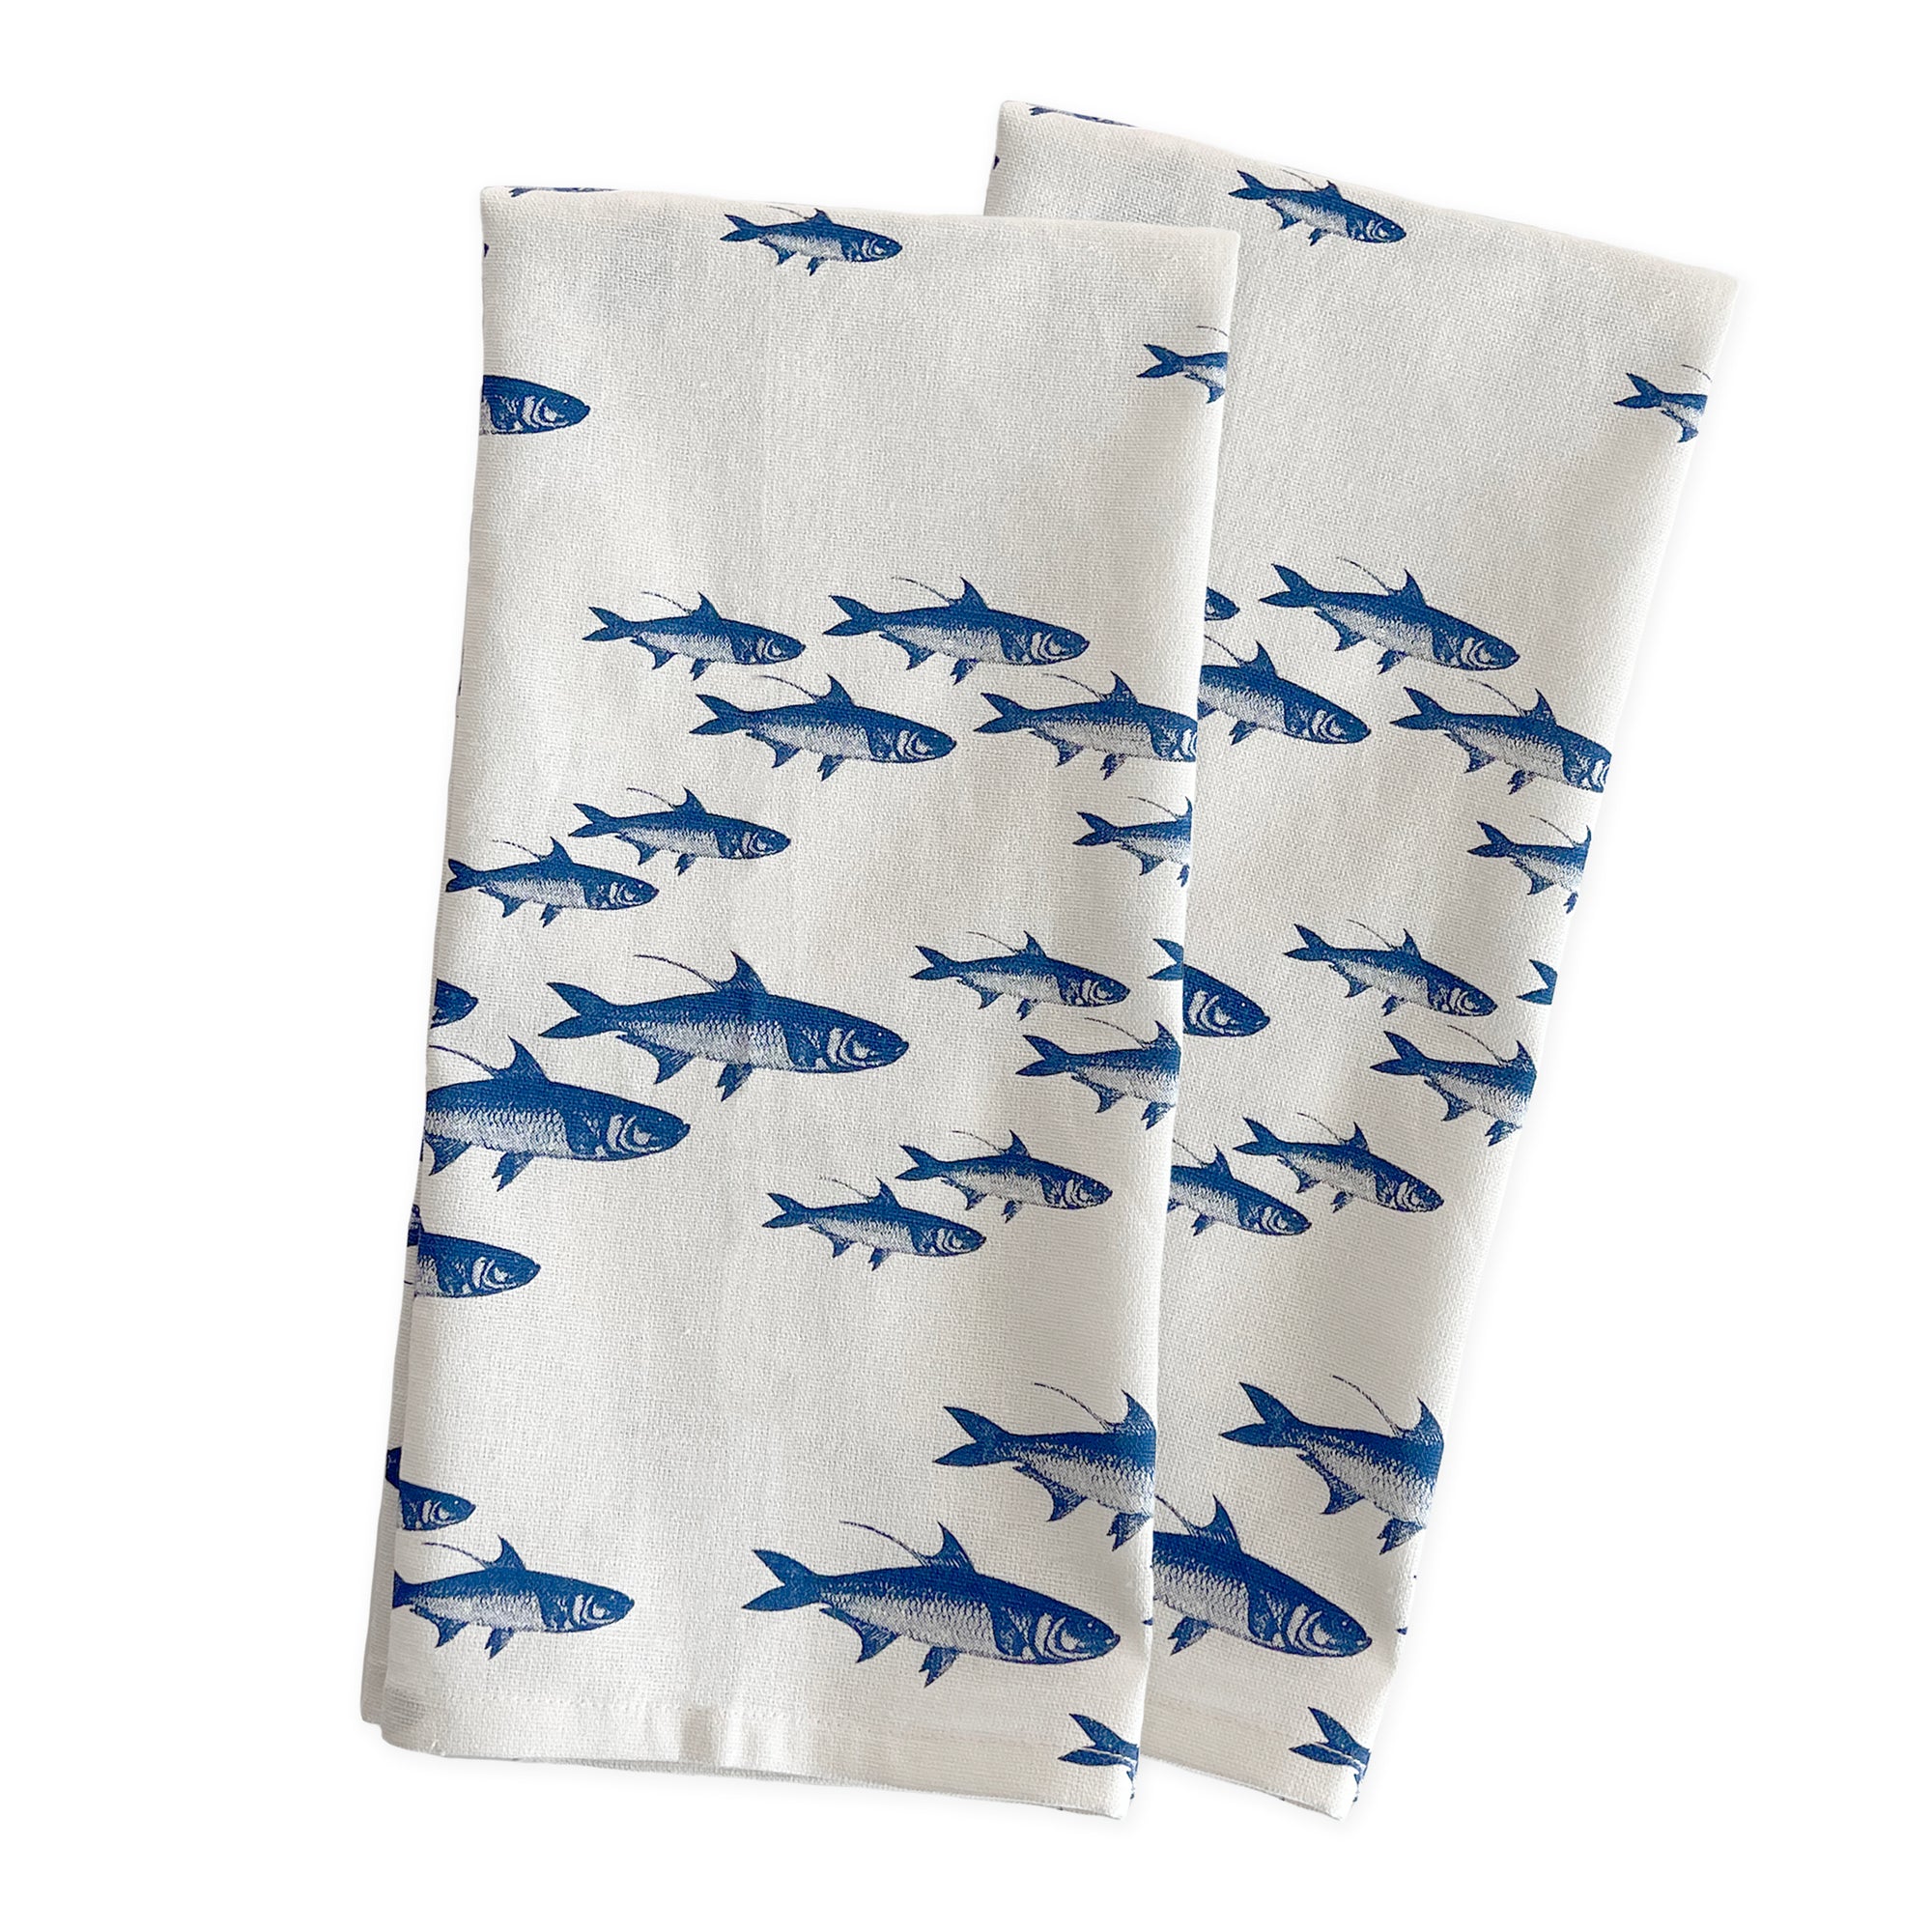 Two folded Caskata School of Fish Kitchen Towels, Set of 2, arranged diagonally on a plain background.